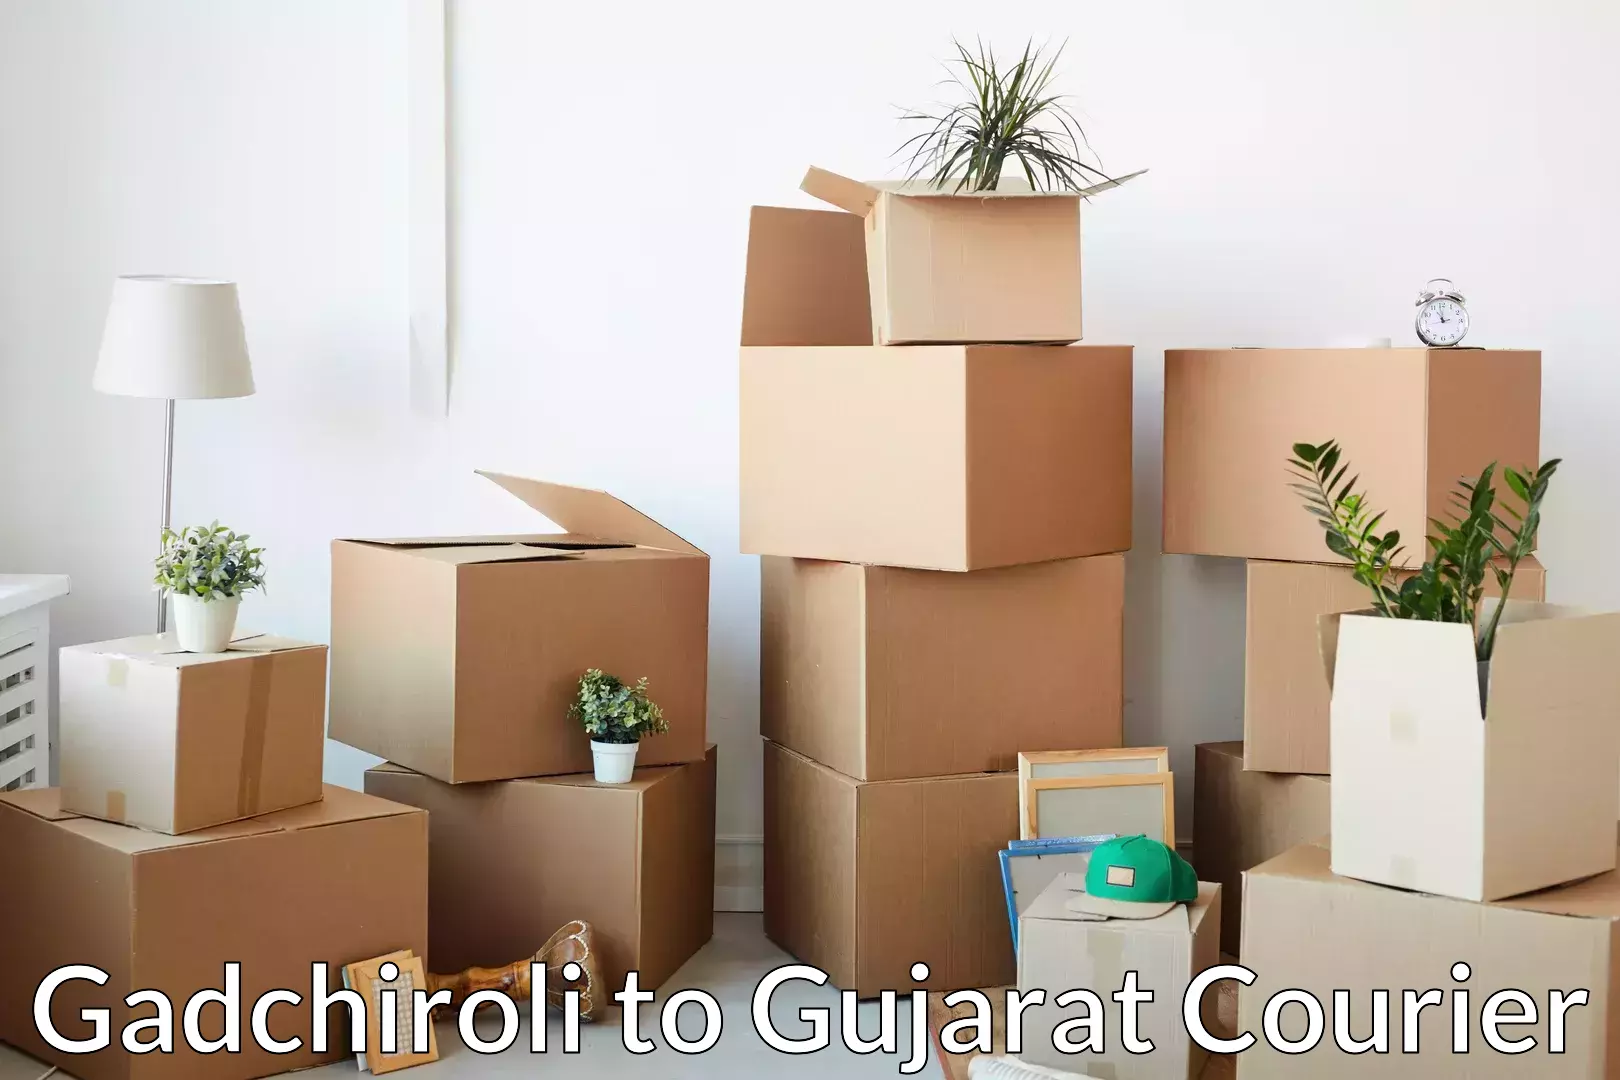 Trusted relocation experts Gadchiroli to Gujarat